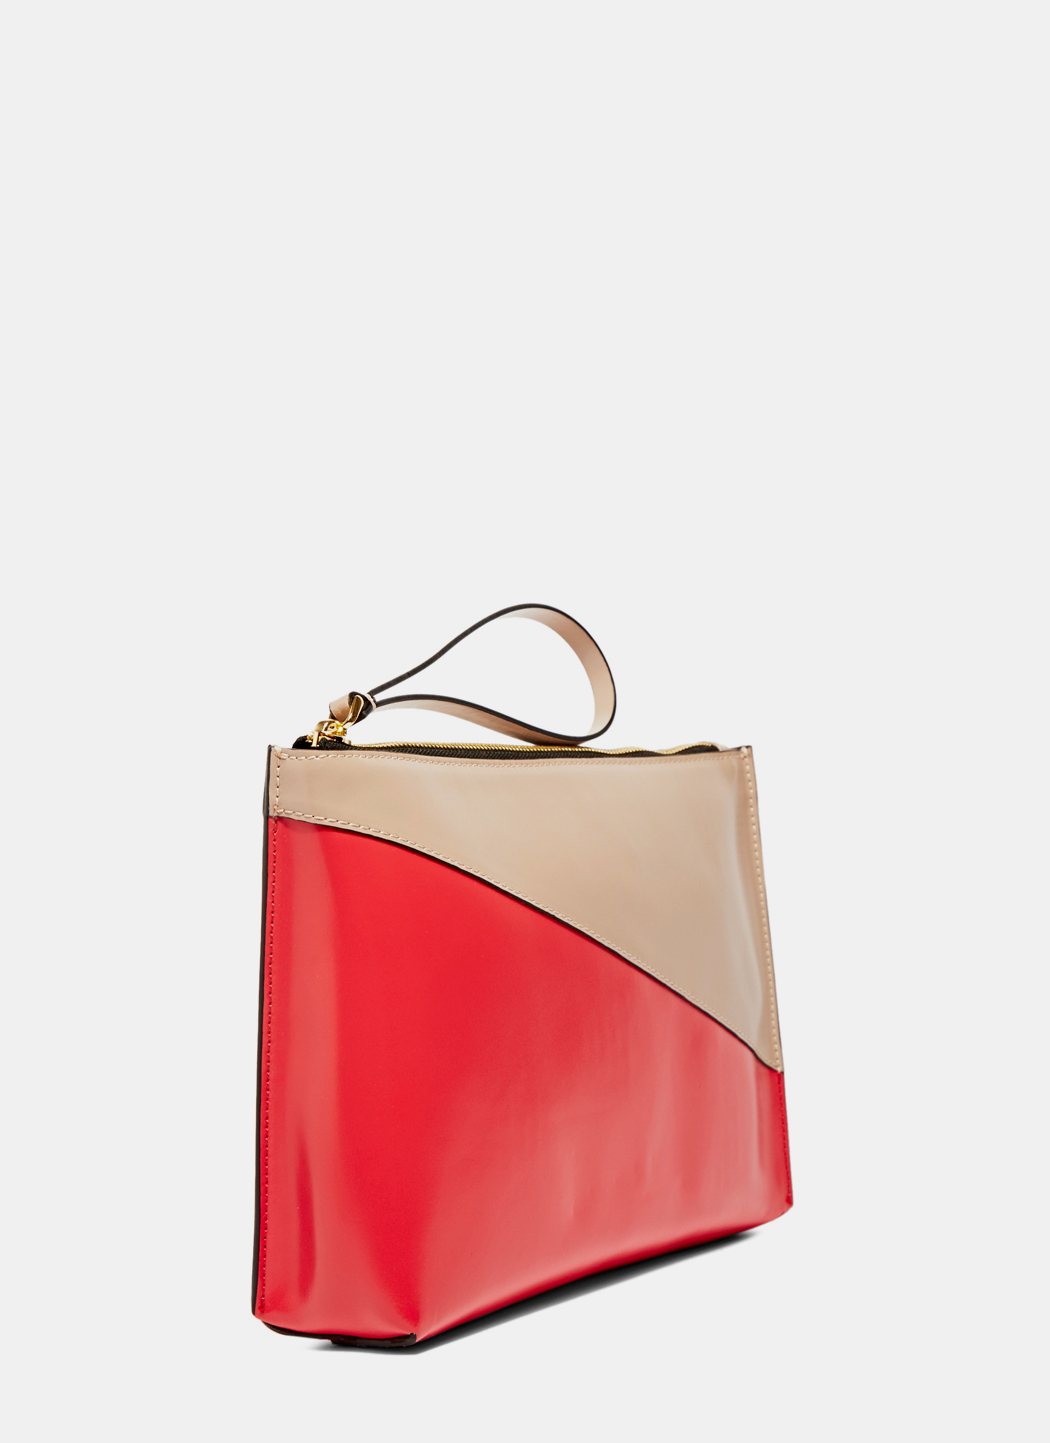 Marni Leather Clutch Bag | LN-CC